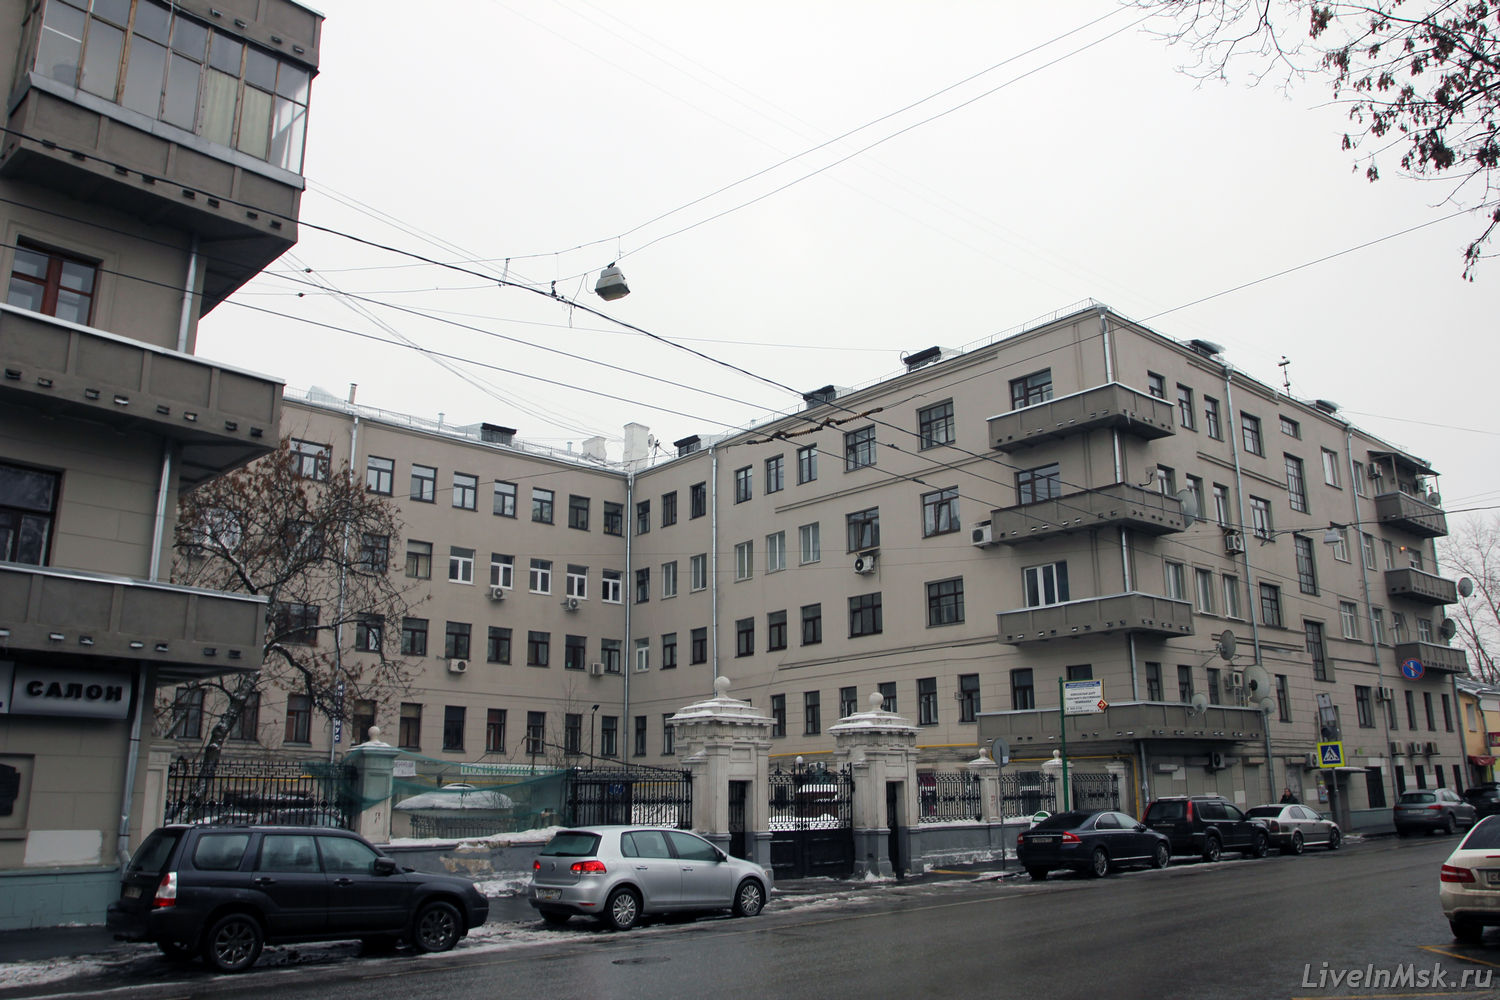 Дом, где жила А.Ахматова